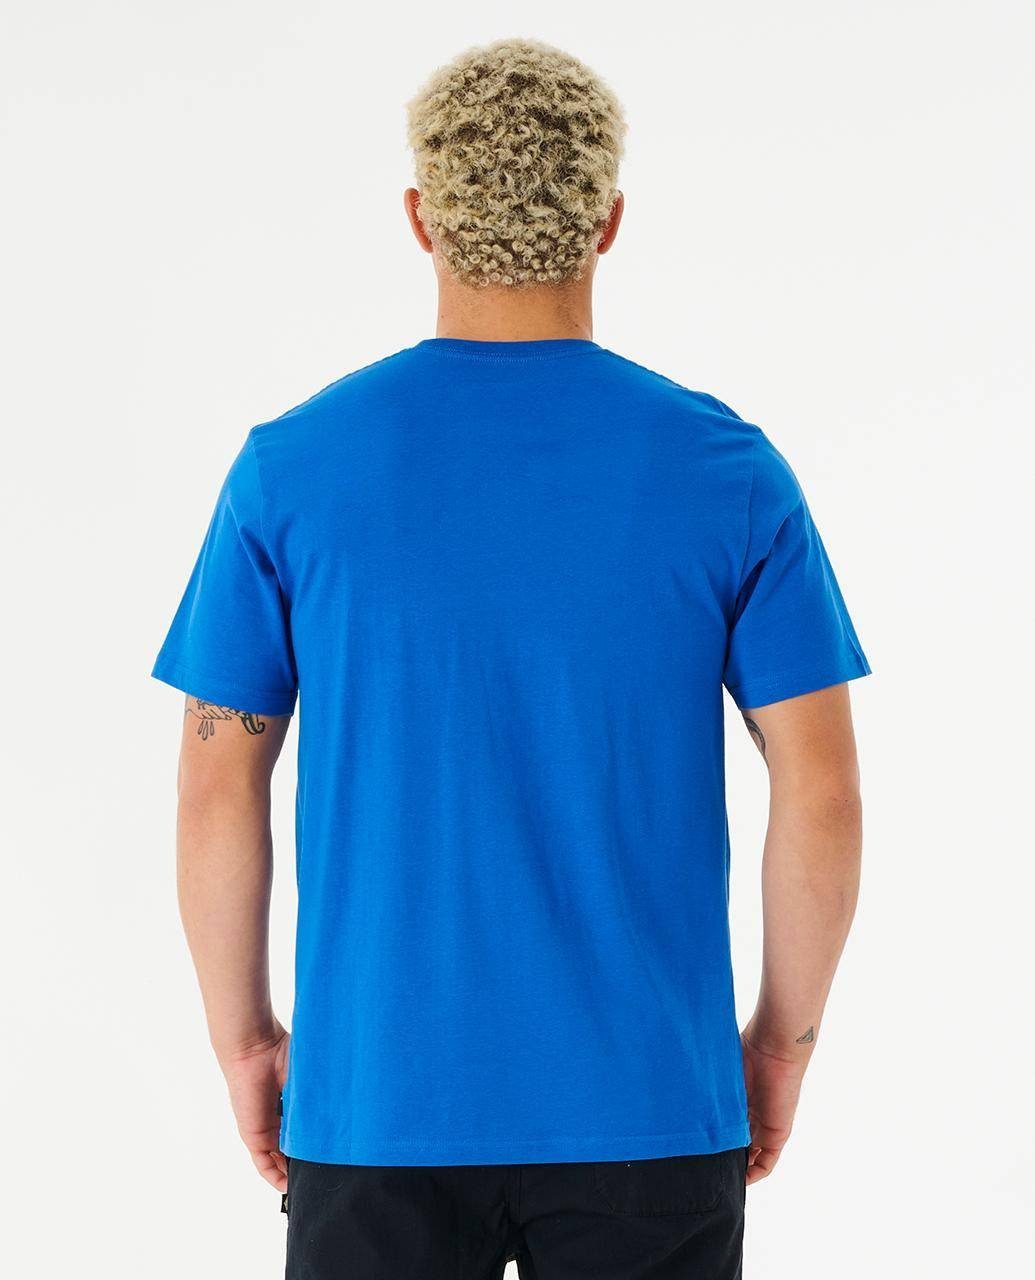 Rip Curl Print-Shirt Surf Revival Waving T-Shirt